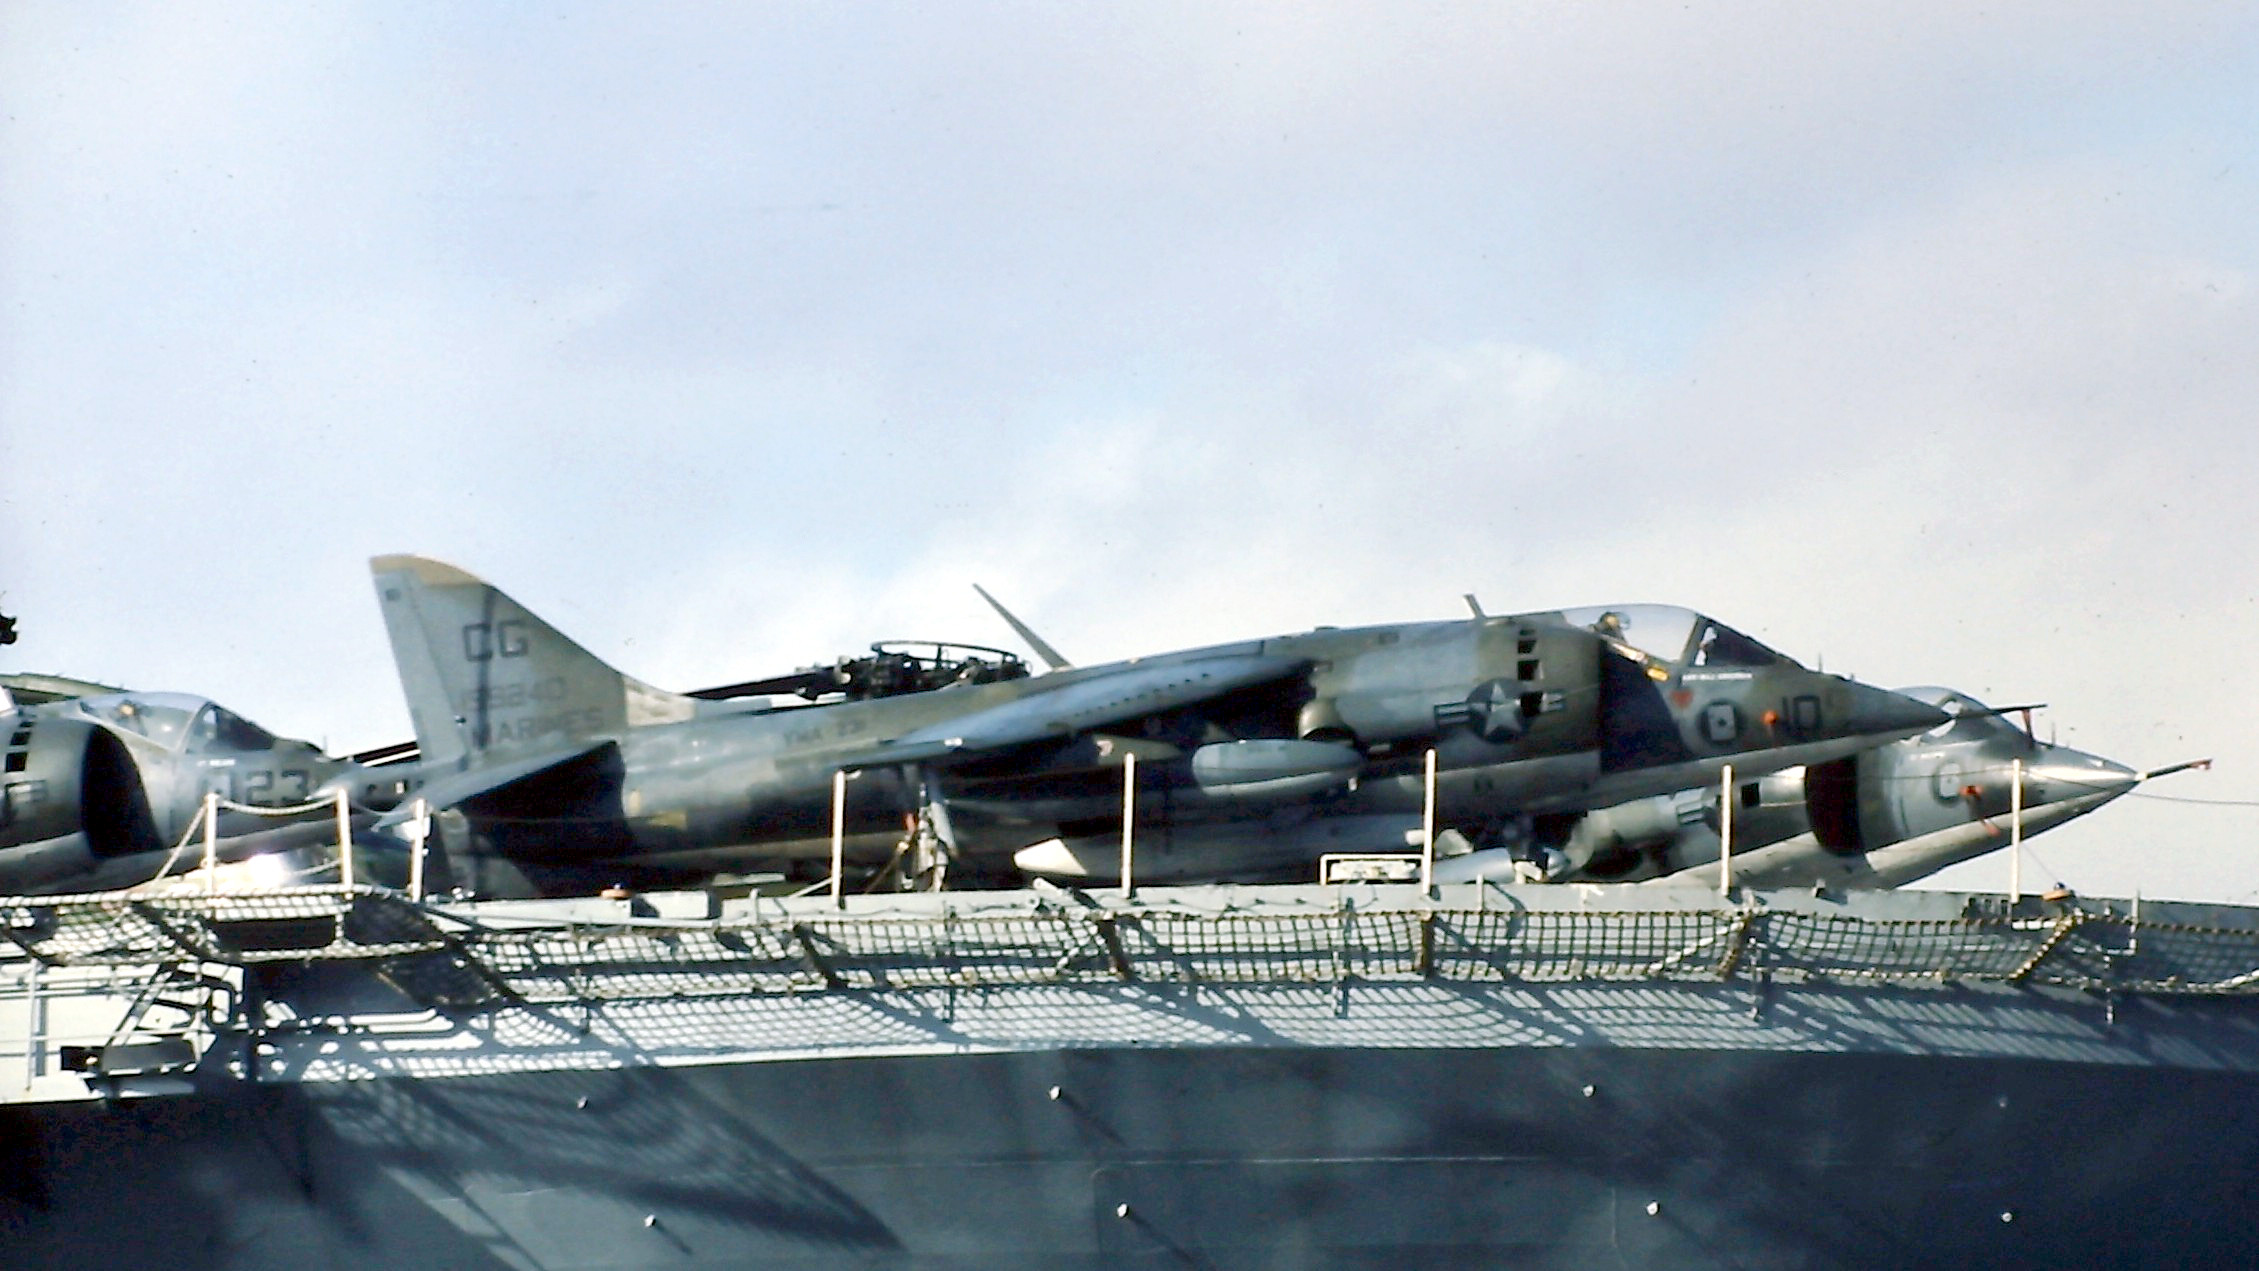 The AV-8A Harrier in US service.